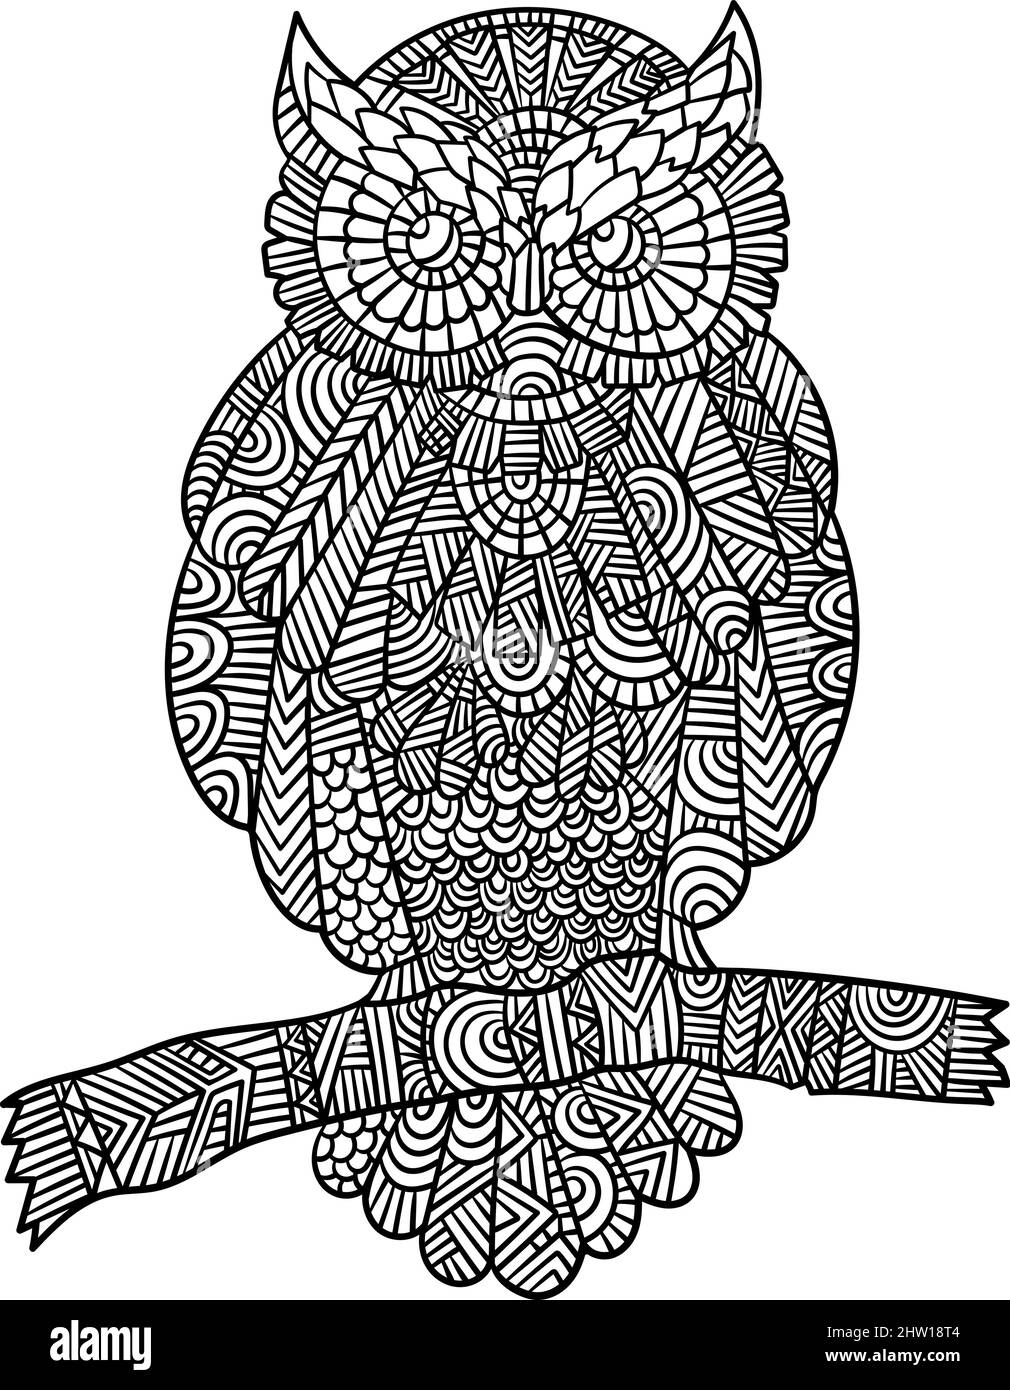 Owl mandala hi-res stock photography and images - Alamy